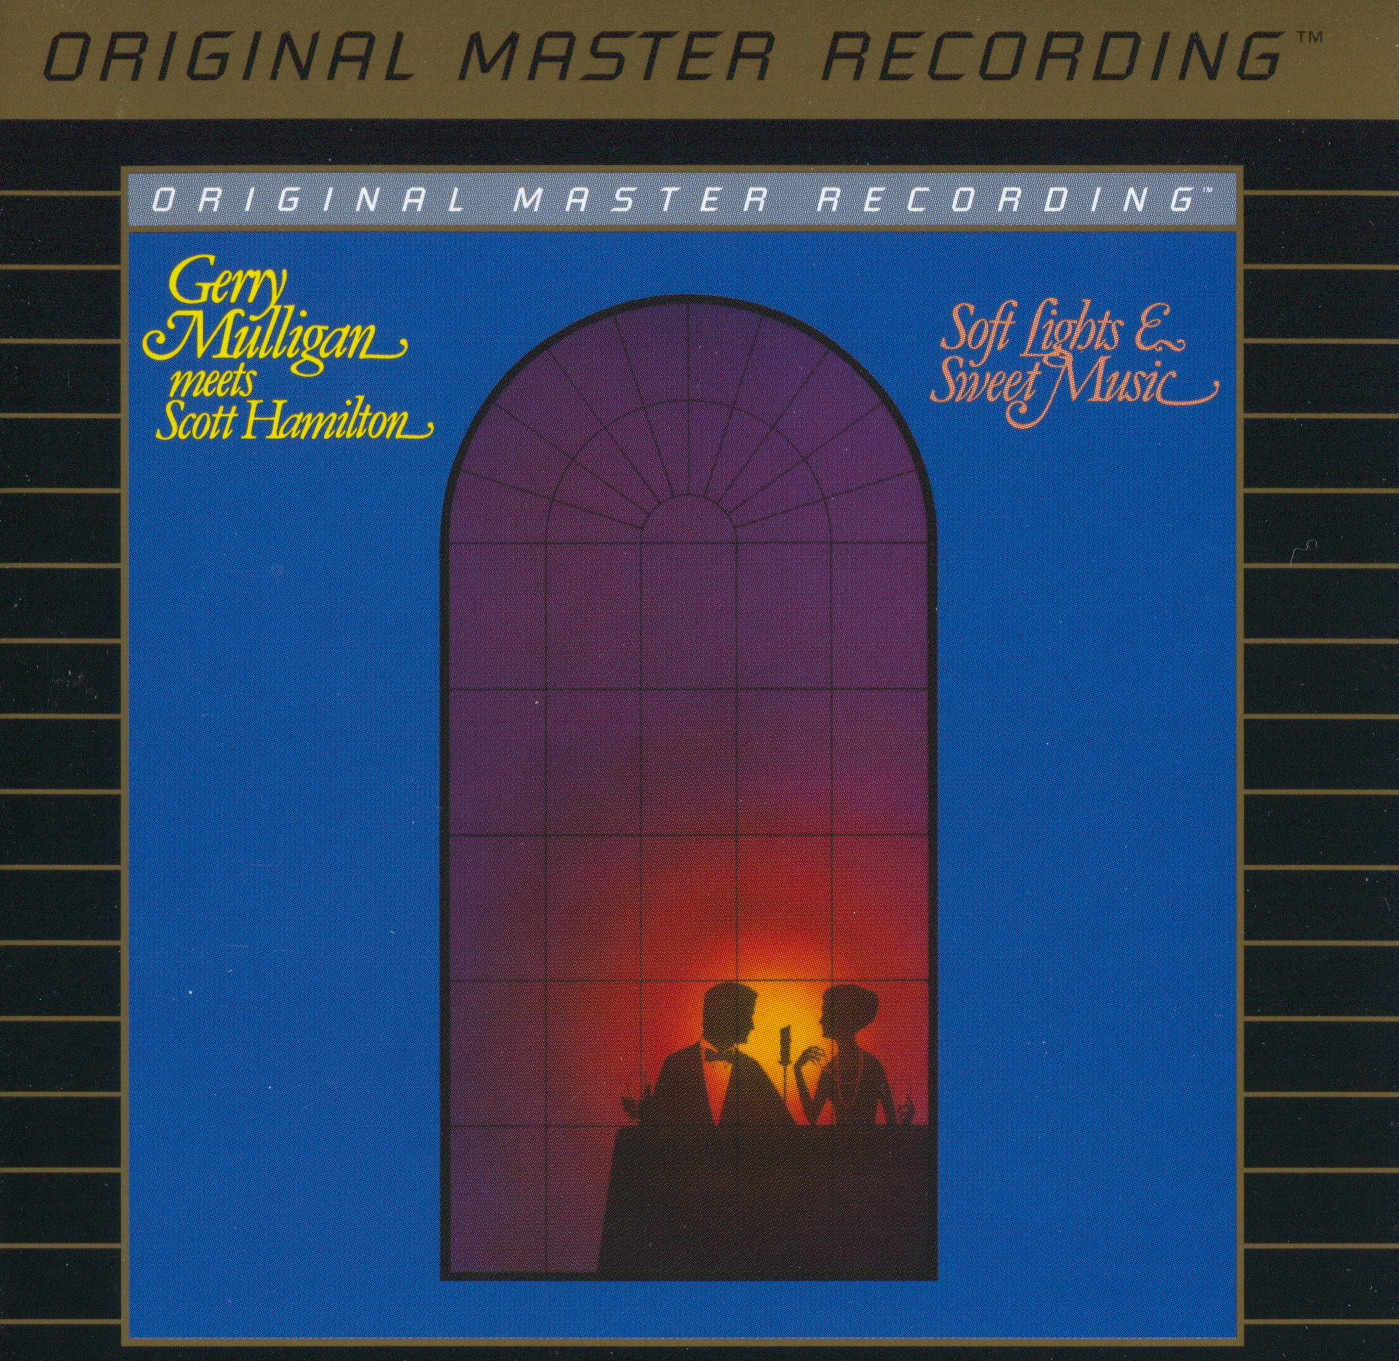 Gerry Mulligan Meets Scott Hamilton - Soft Lights & Sweet Music (1986) [MFSL 2006] {SACD ISO + FLAC 24bit/88,2kHz}